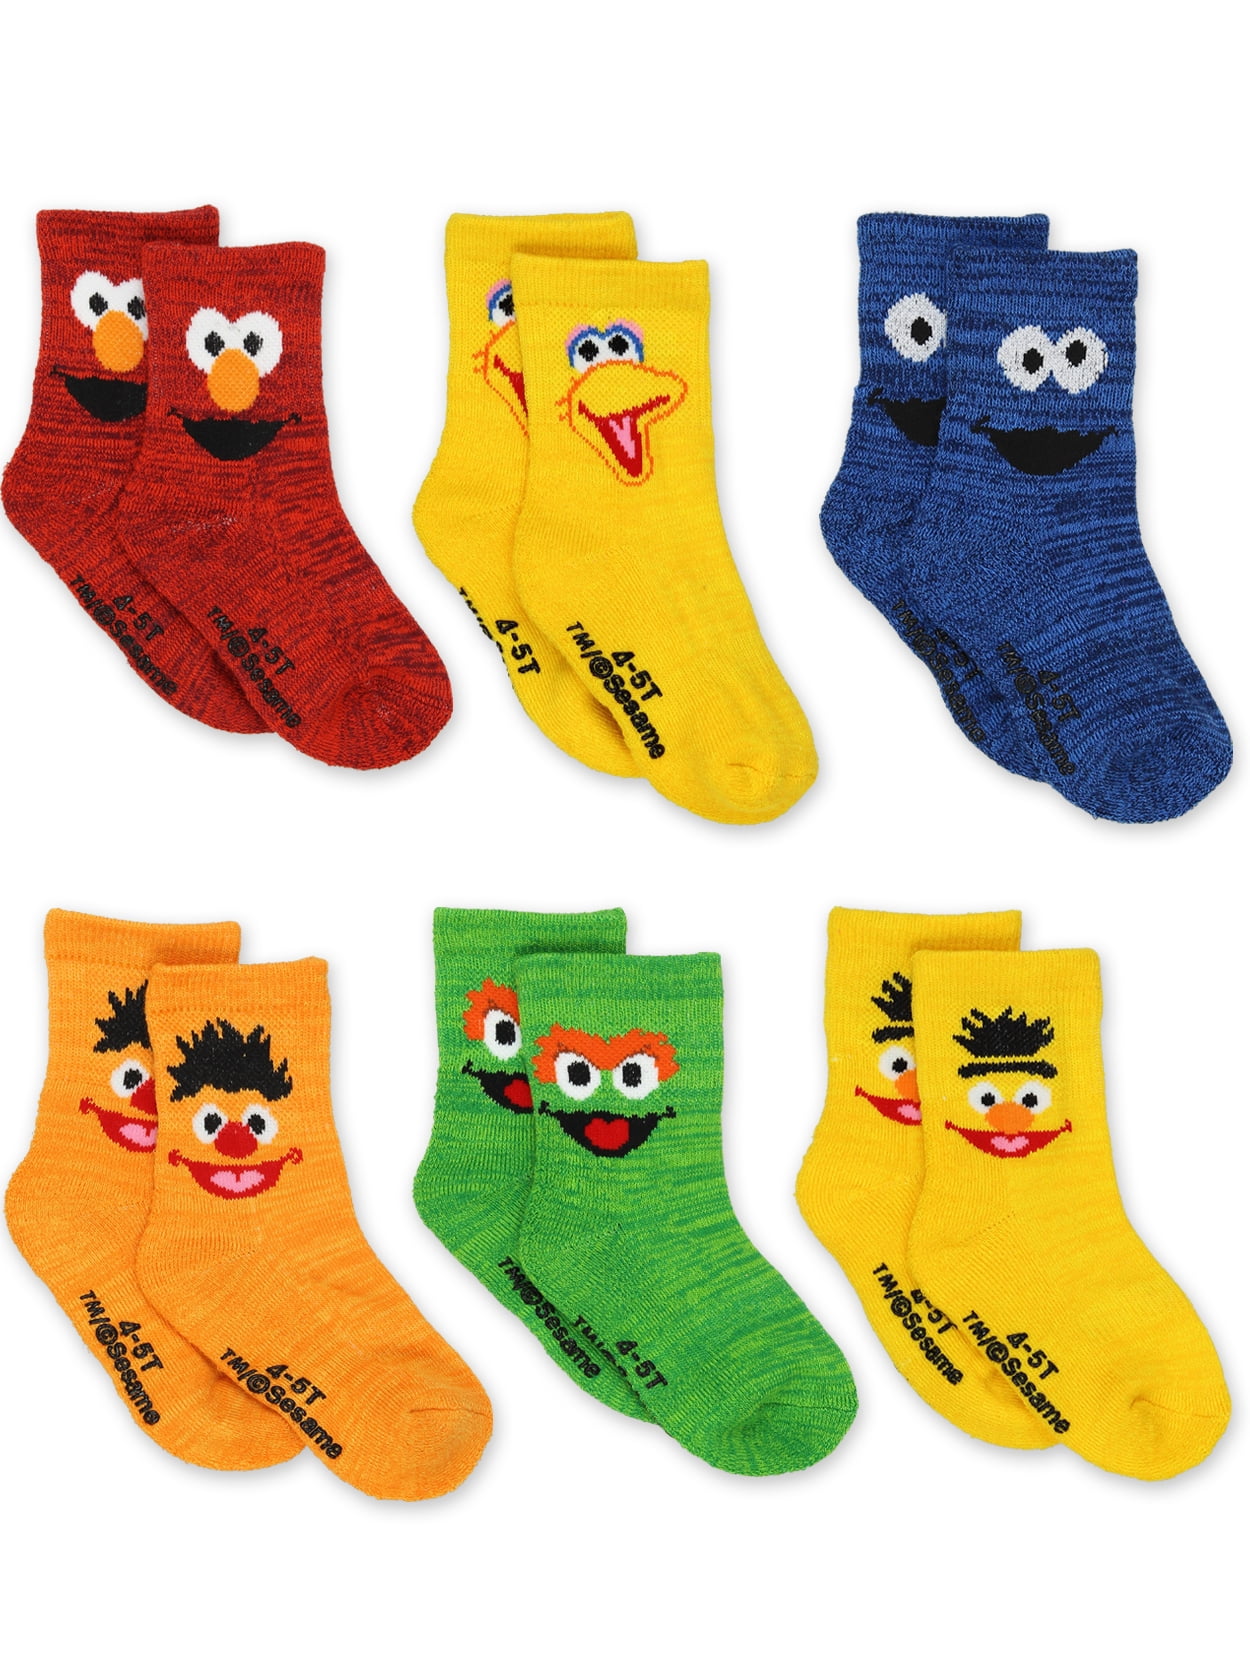 Pac-Man Kids Socks Pack of 2 Pairs